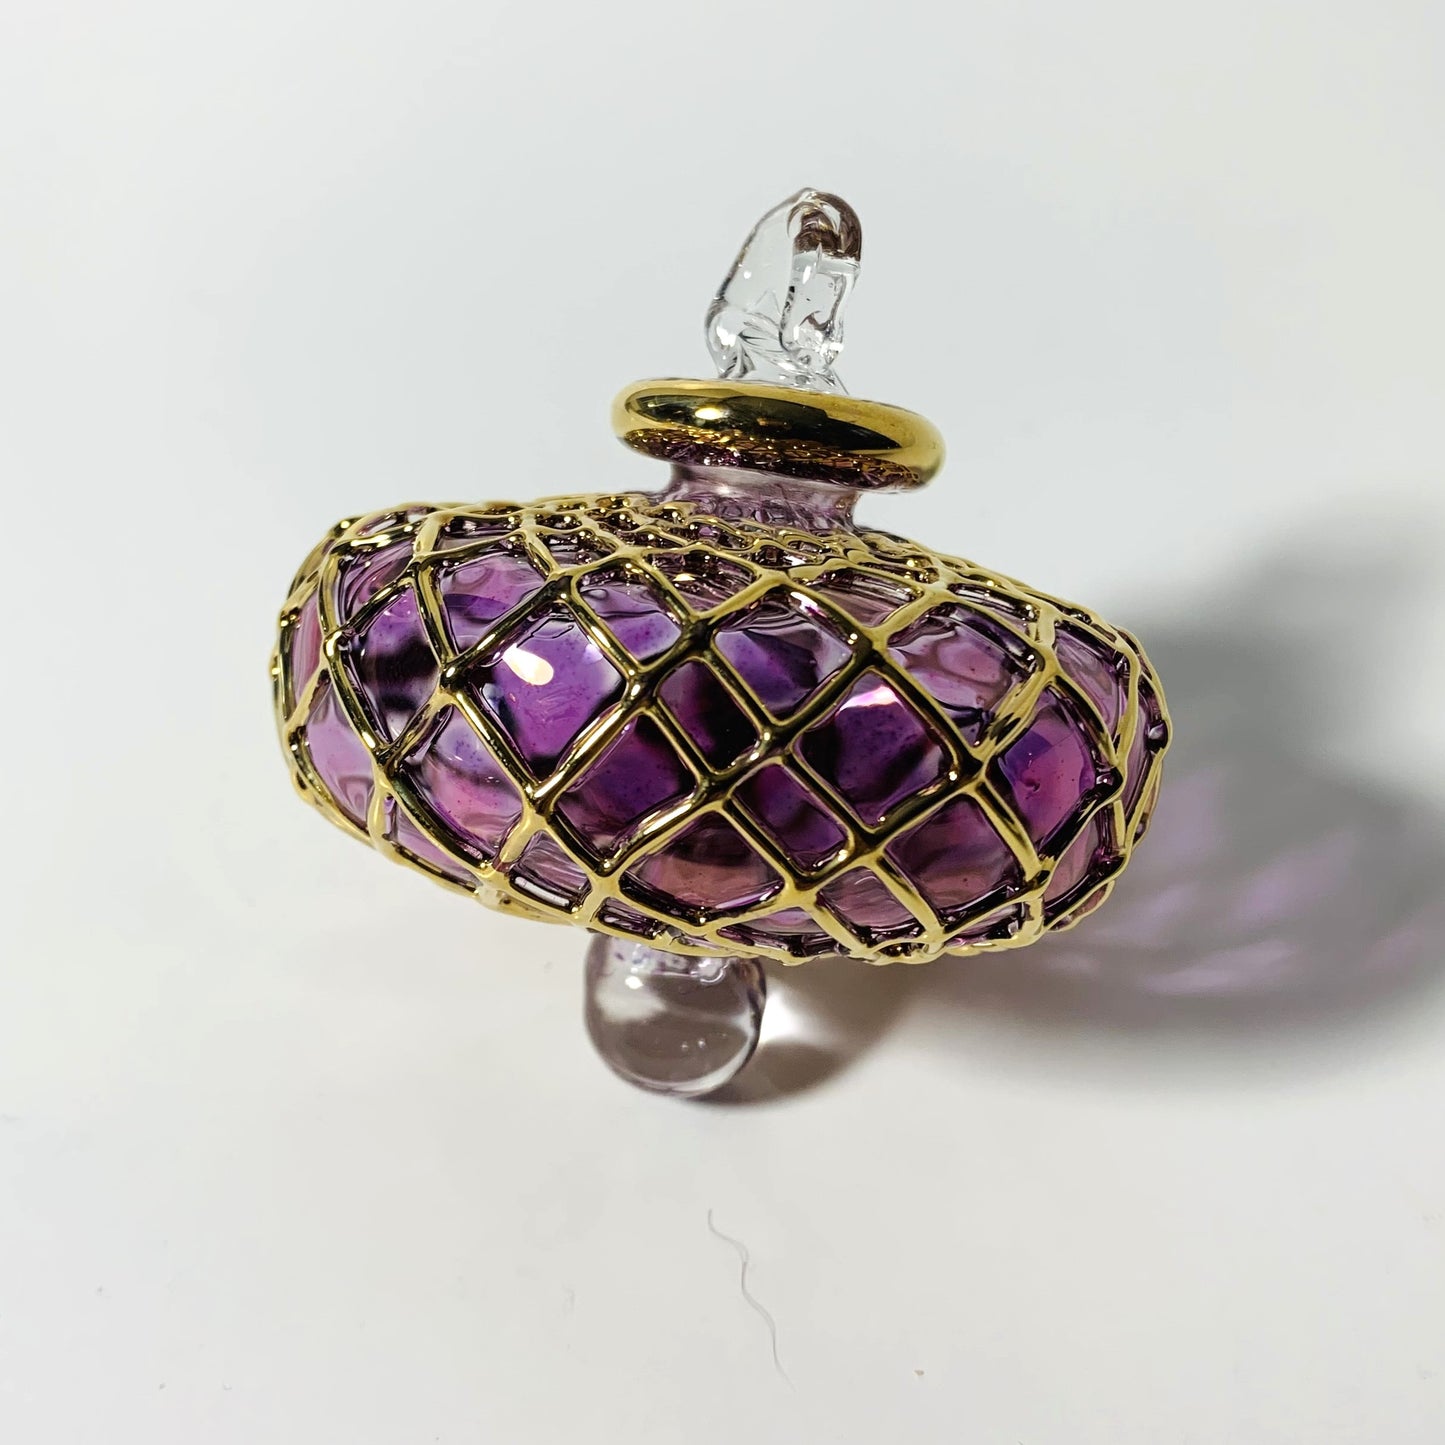 Blown Glass Small Ornament - Diamond Toupie